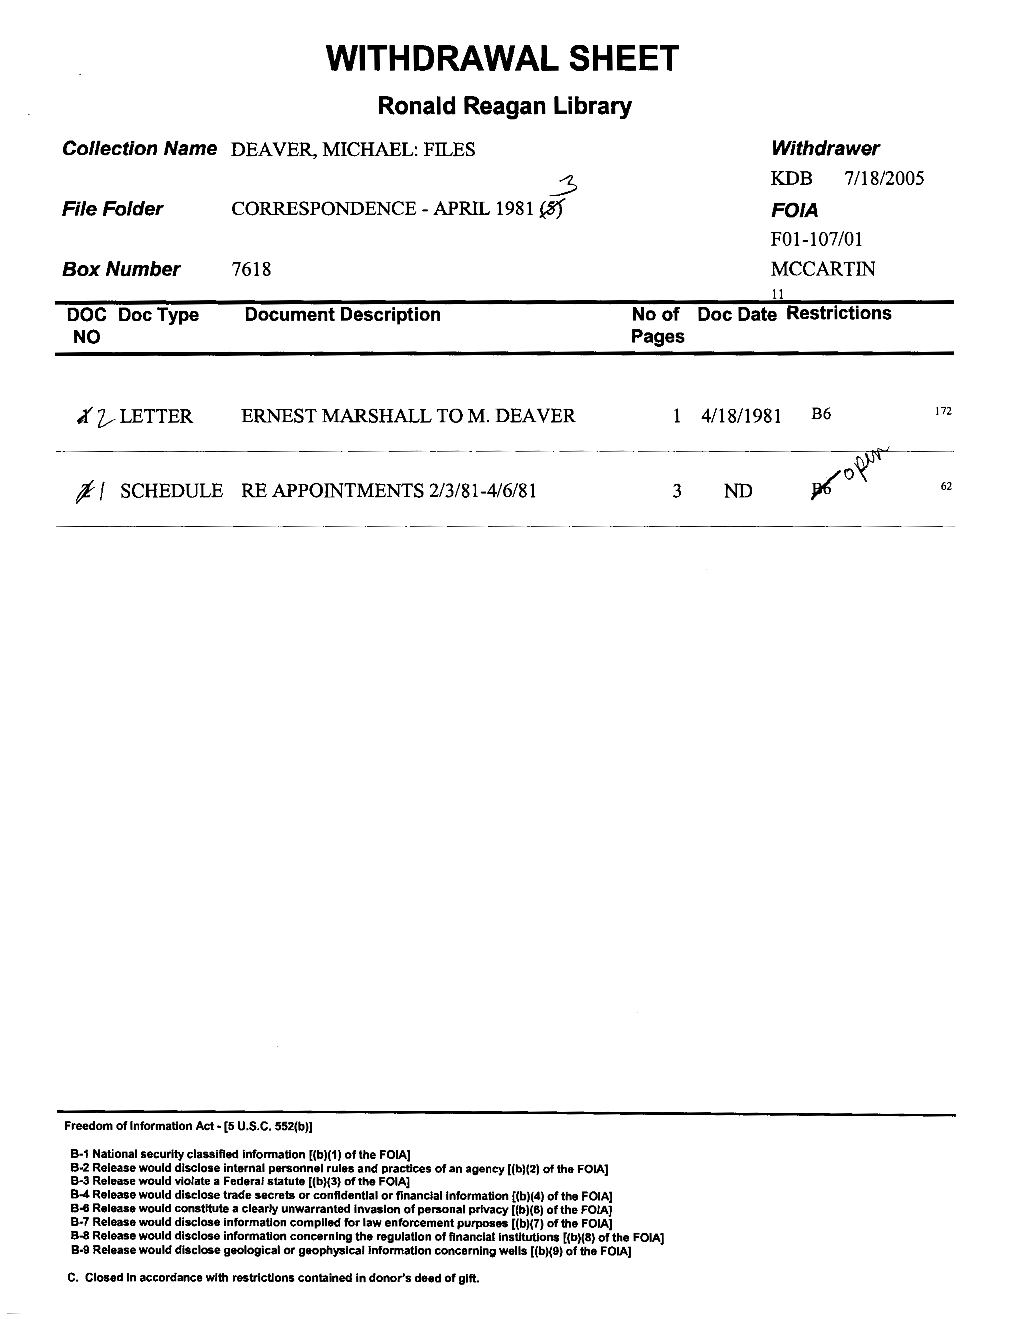 APRIL 1981 K8'} FOIA Fol-107/01 Box Number 7618 MCCARTIN 11 DOC Doctype Document Description No of Doc Date Restrictions NO Pages